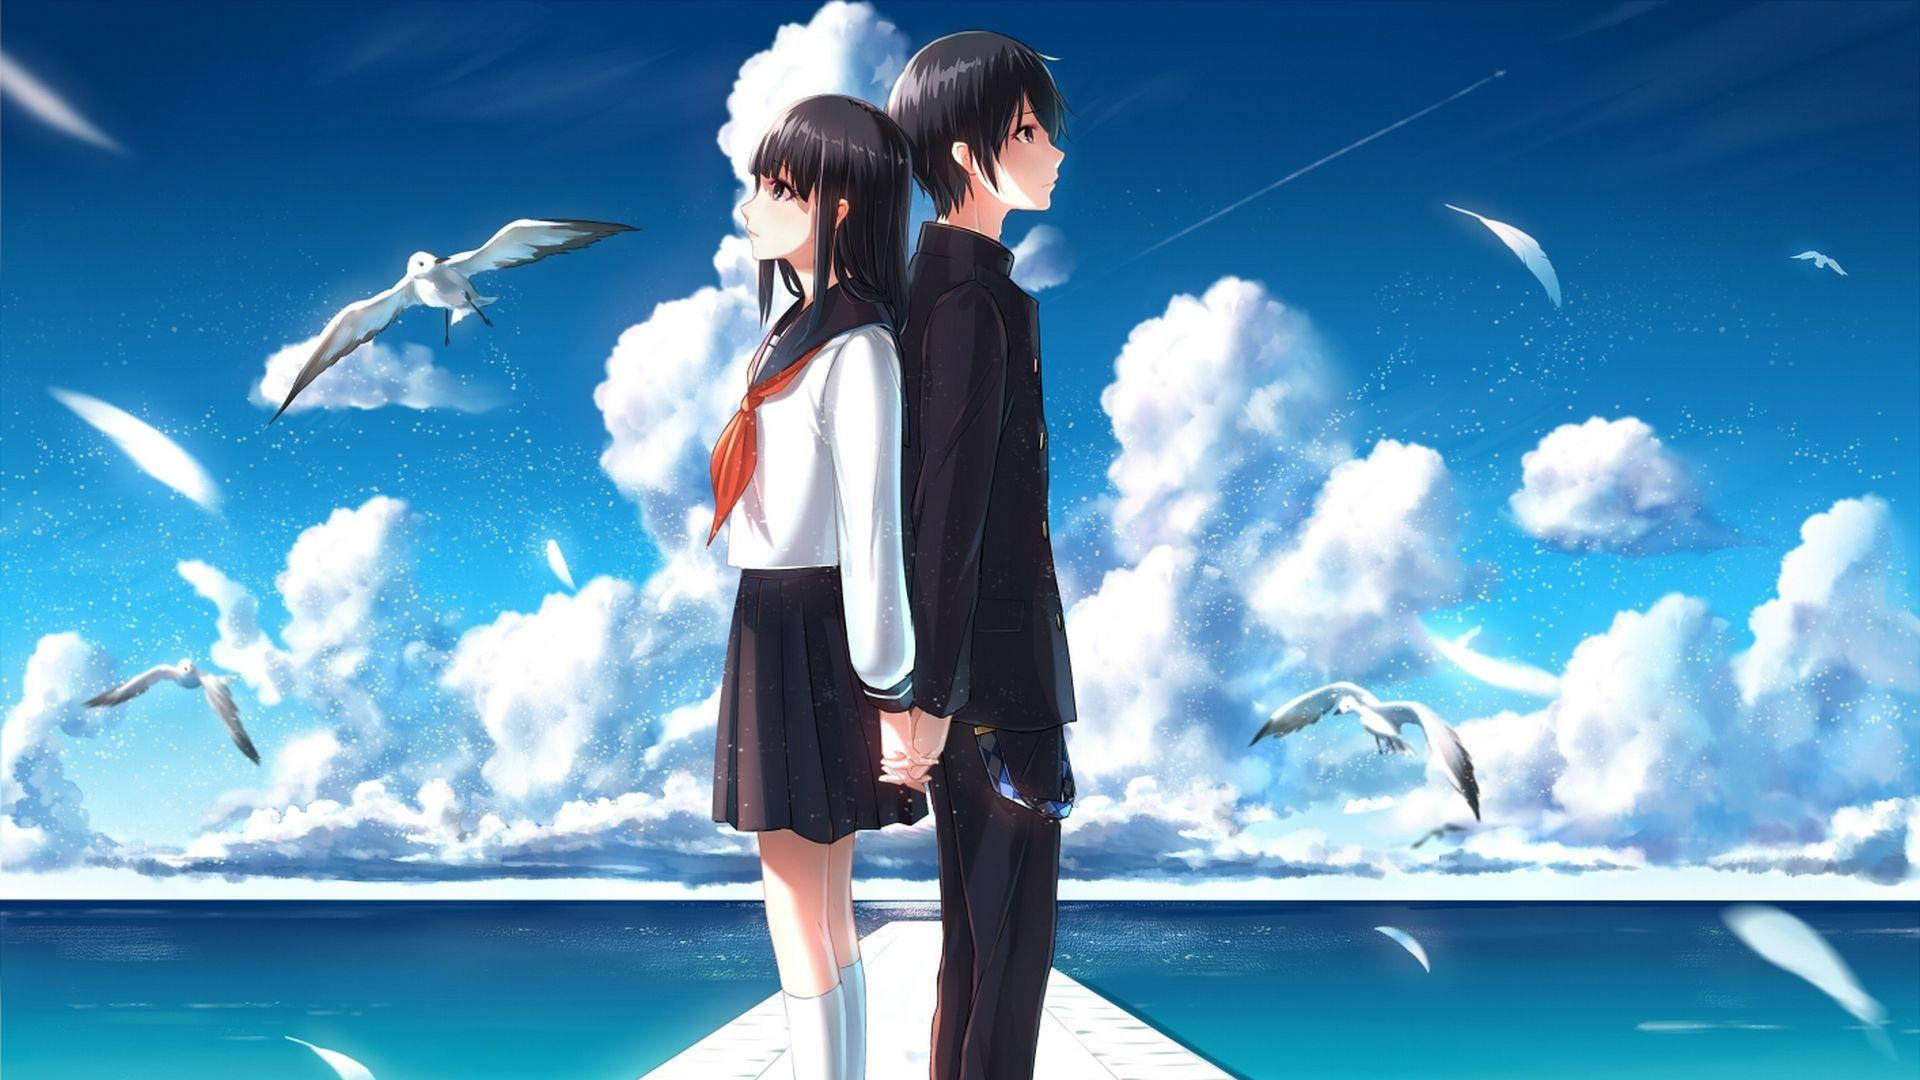 Couple On Slipway Love Anime Background